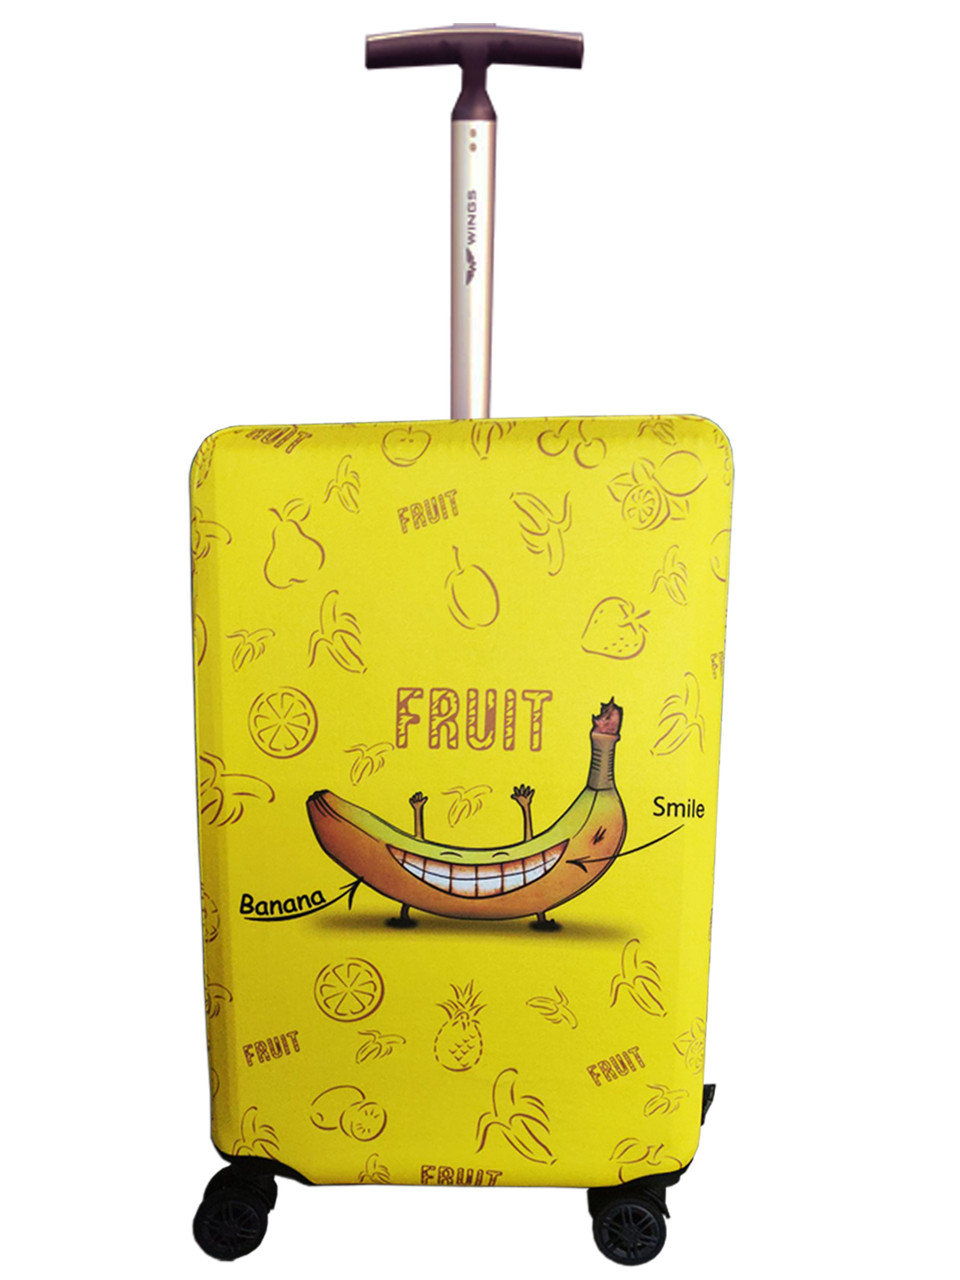 Чохол для валізи Coverbag неопрен L банан